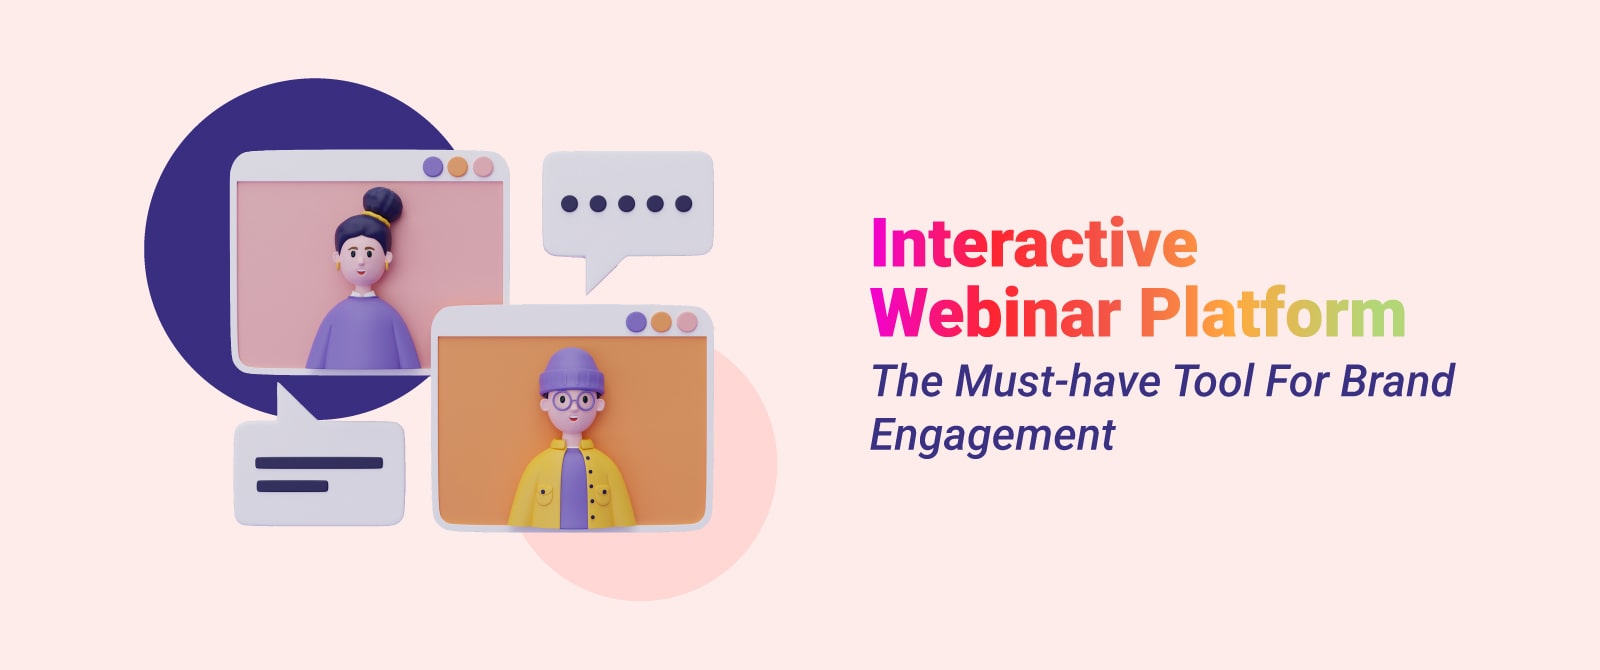 Why Interactive Webinar Platforms Matter for Brand Engagement